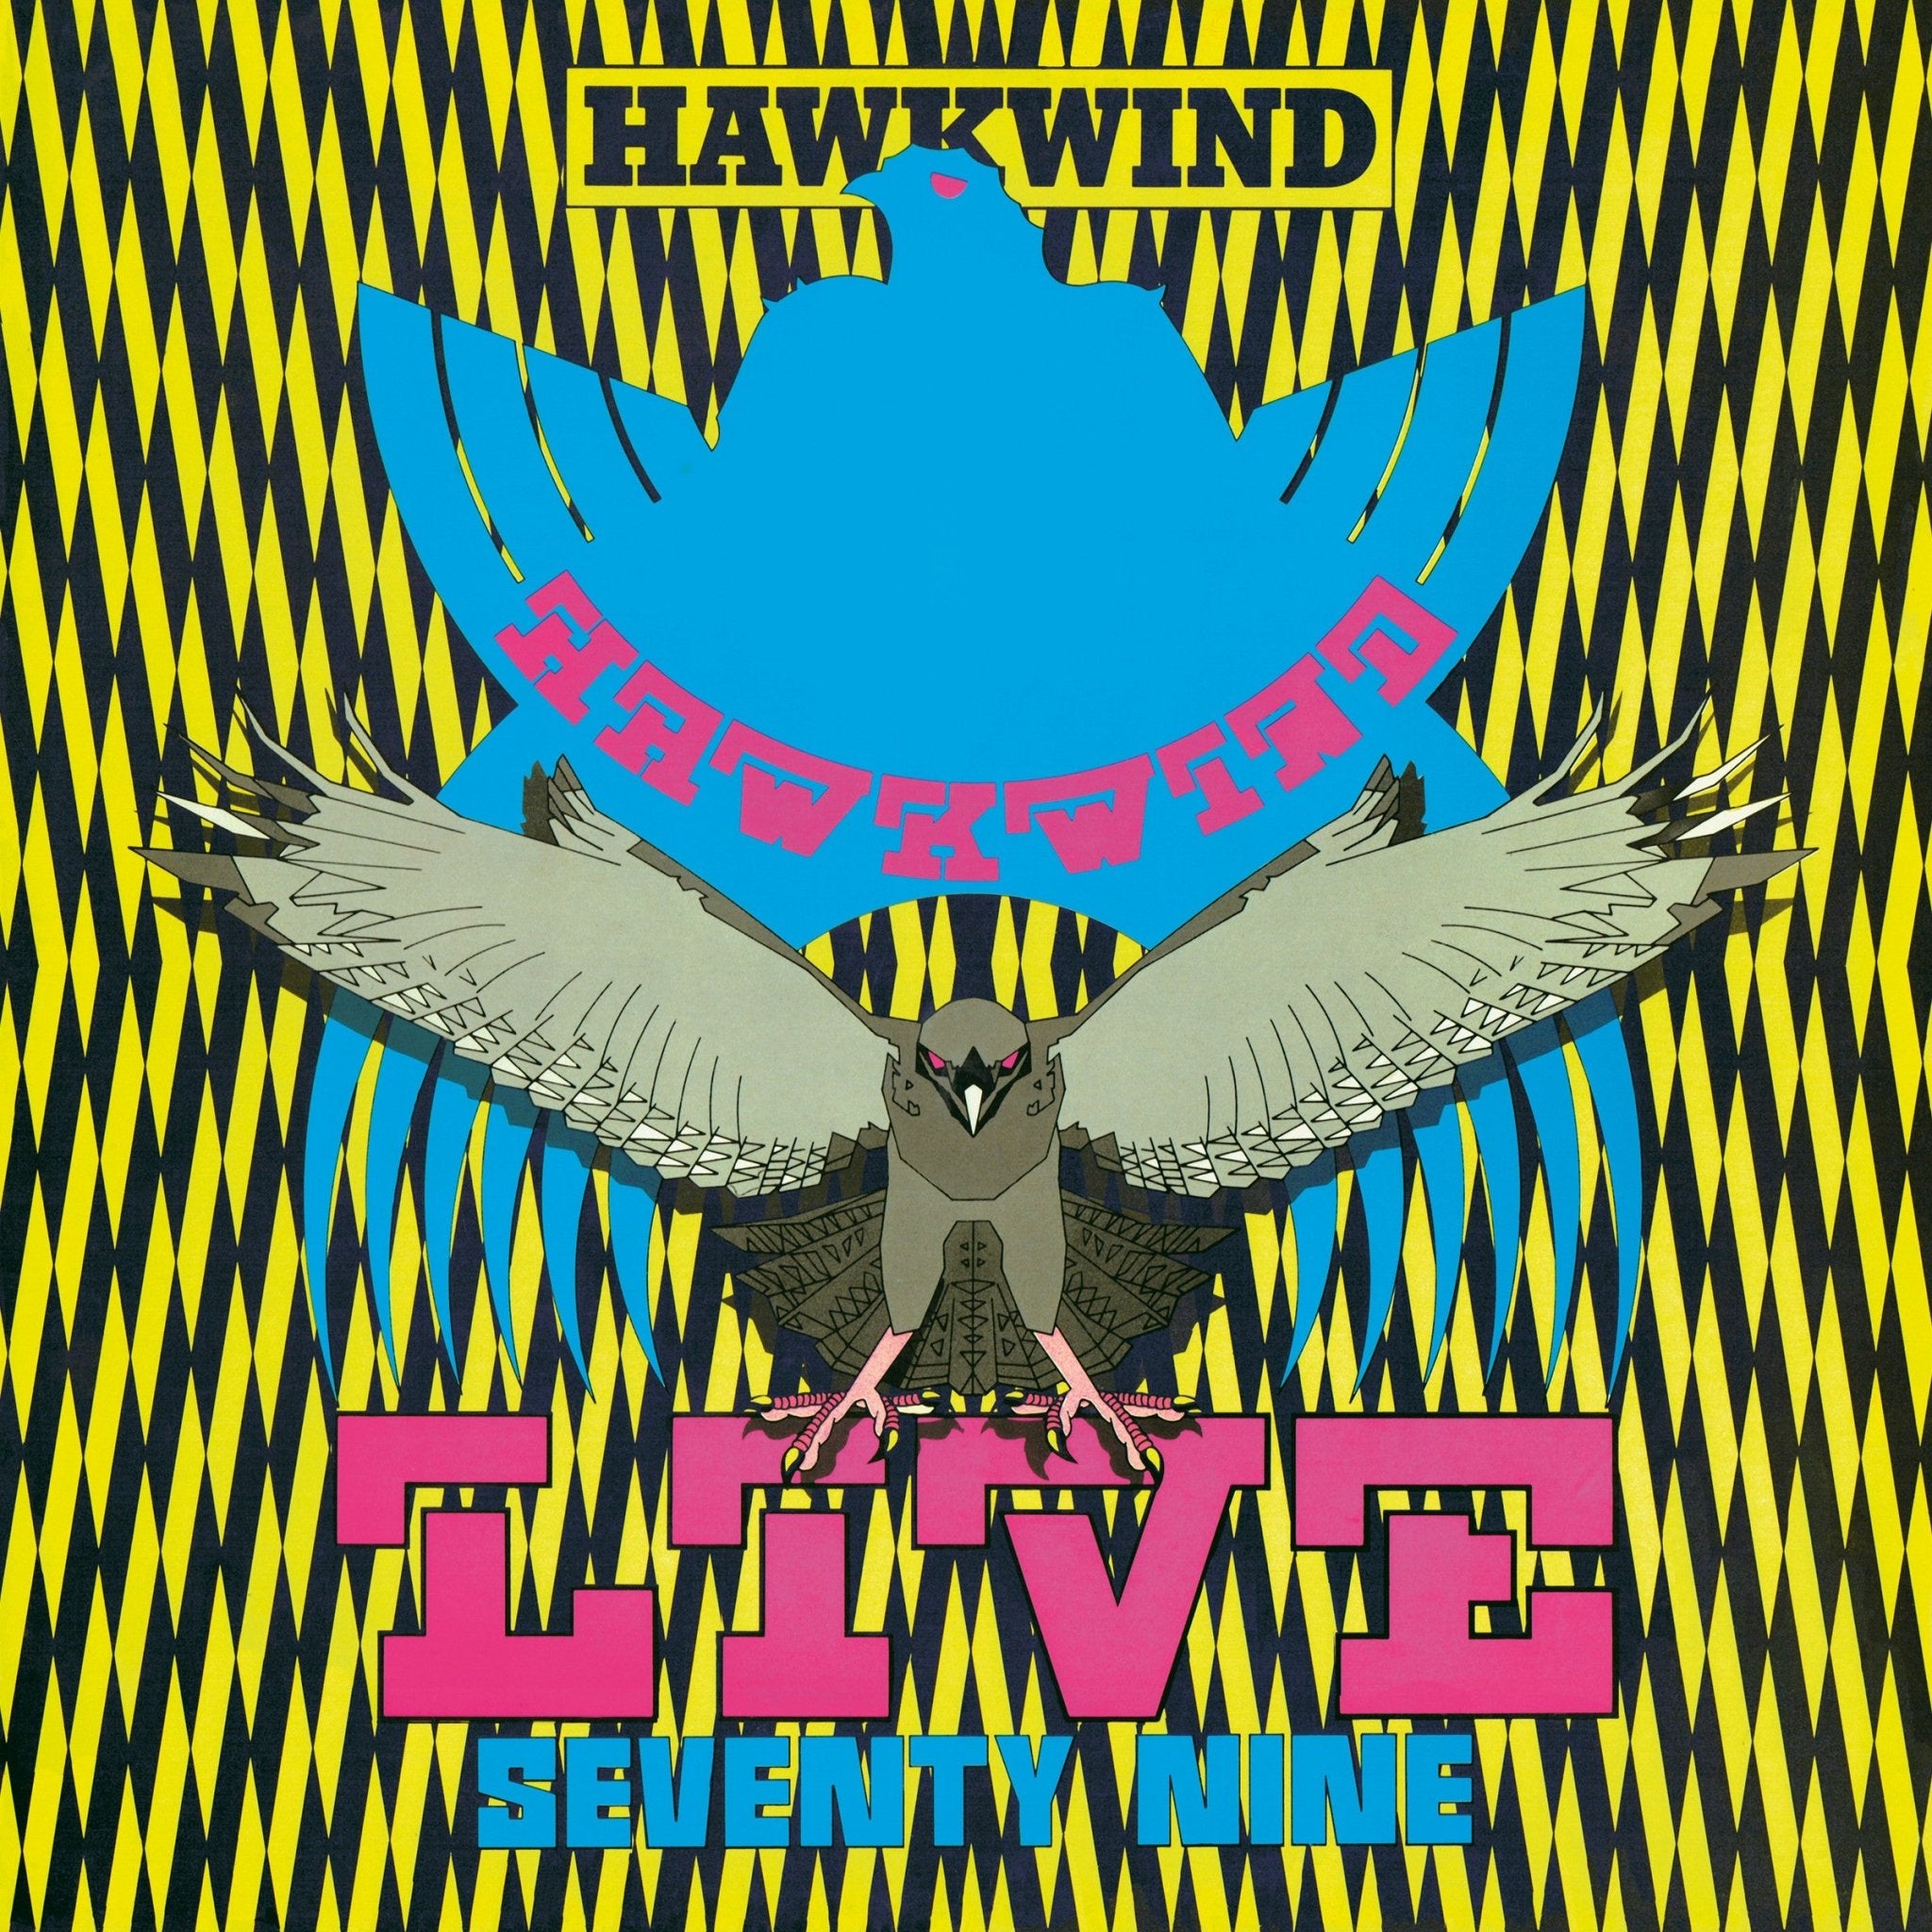 Hawkwind - Live Seventy-Nine - 33RPM